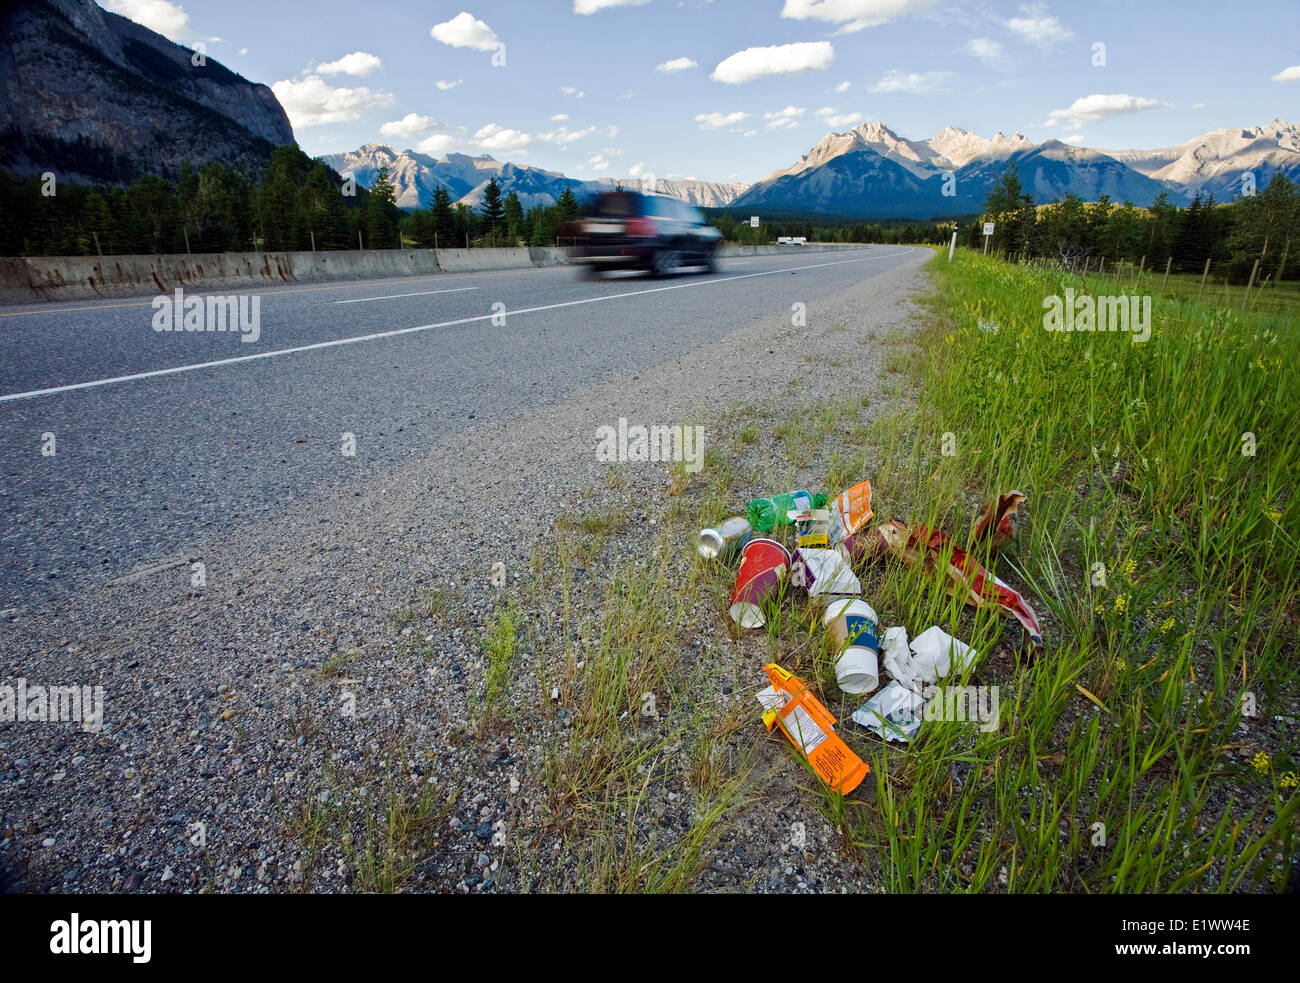 Am Straßenrand Müll am Trans Canada Highway, Banff Nationalpark, Alberta, Kanada. Stockfoto